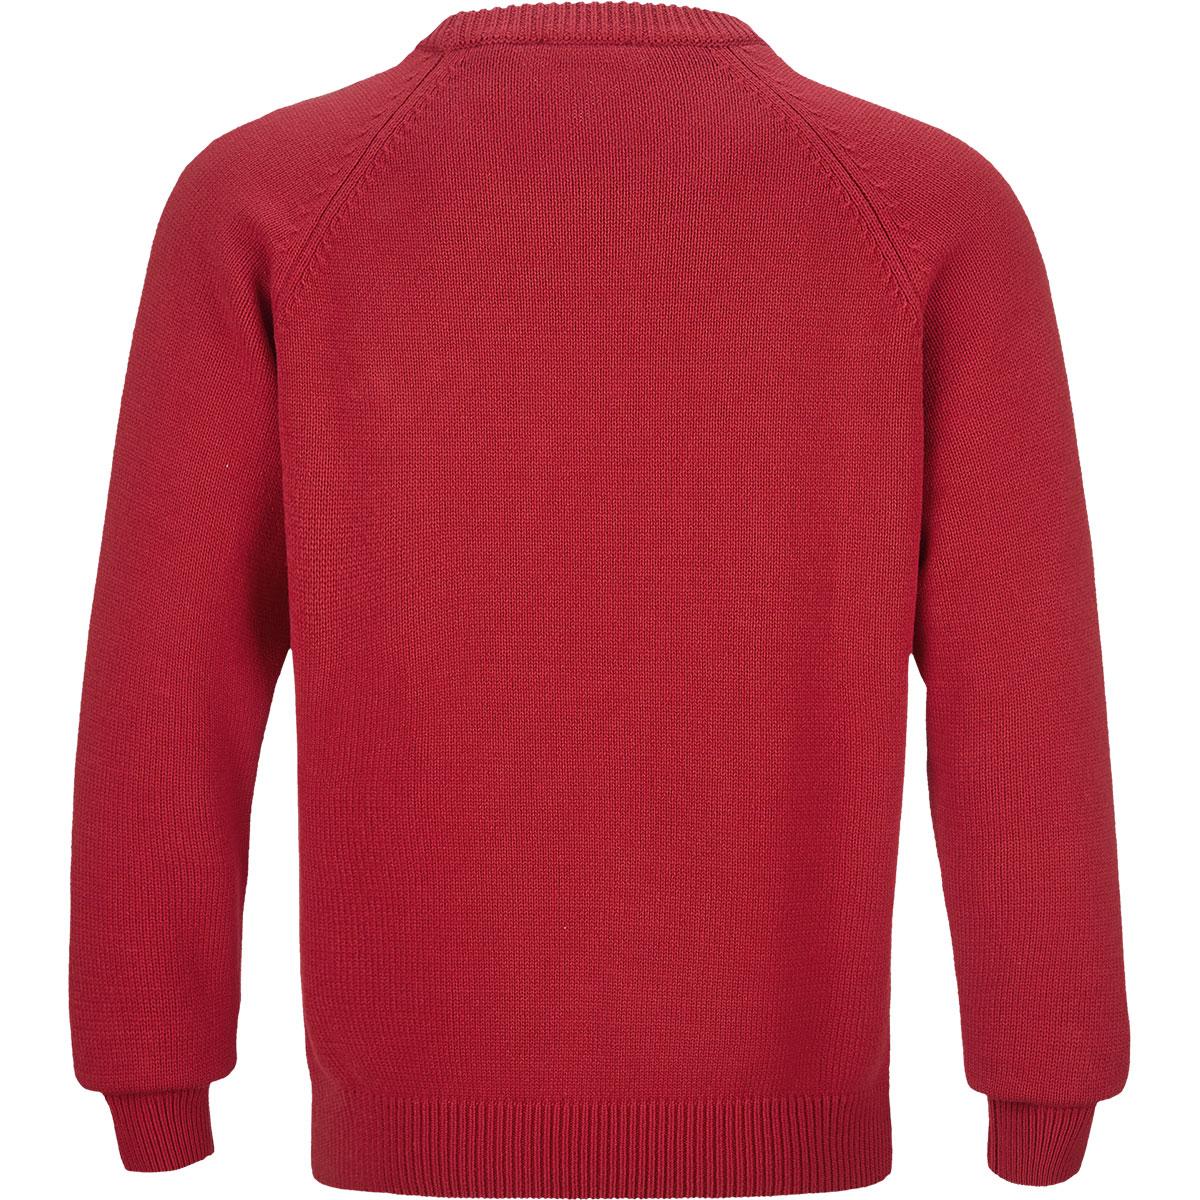 Cornell Intarsia Sweater